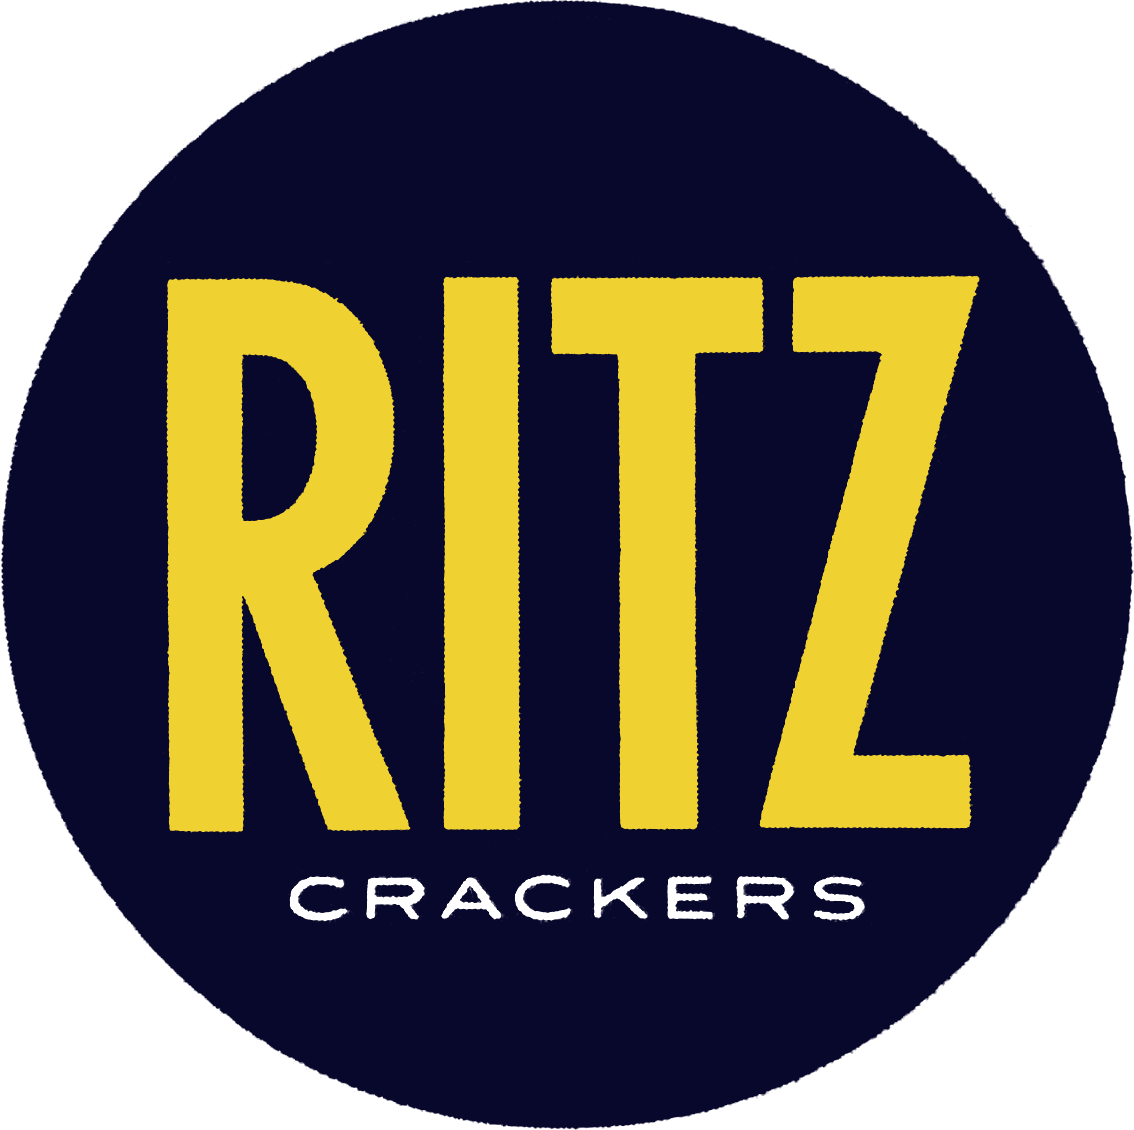 Cracker Logo - Ritz | Logopedia | FANDOM powered by Wikia